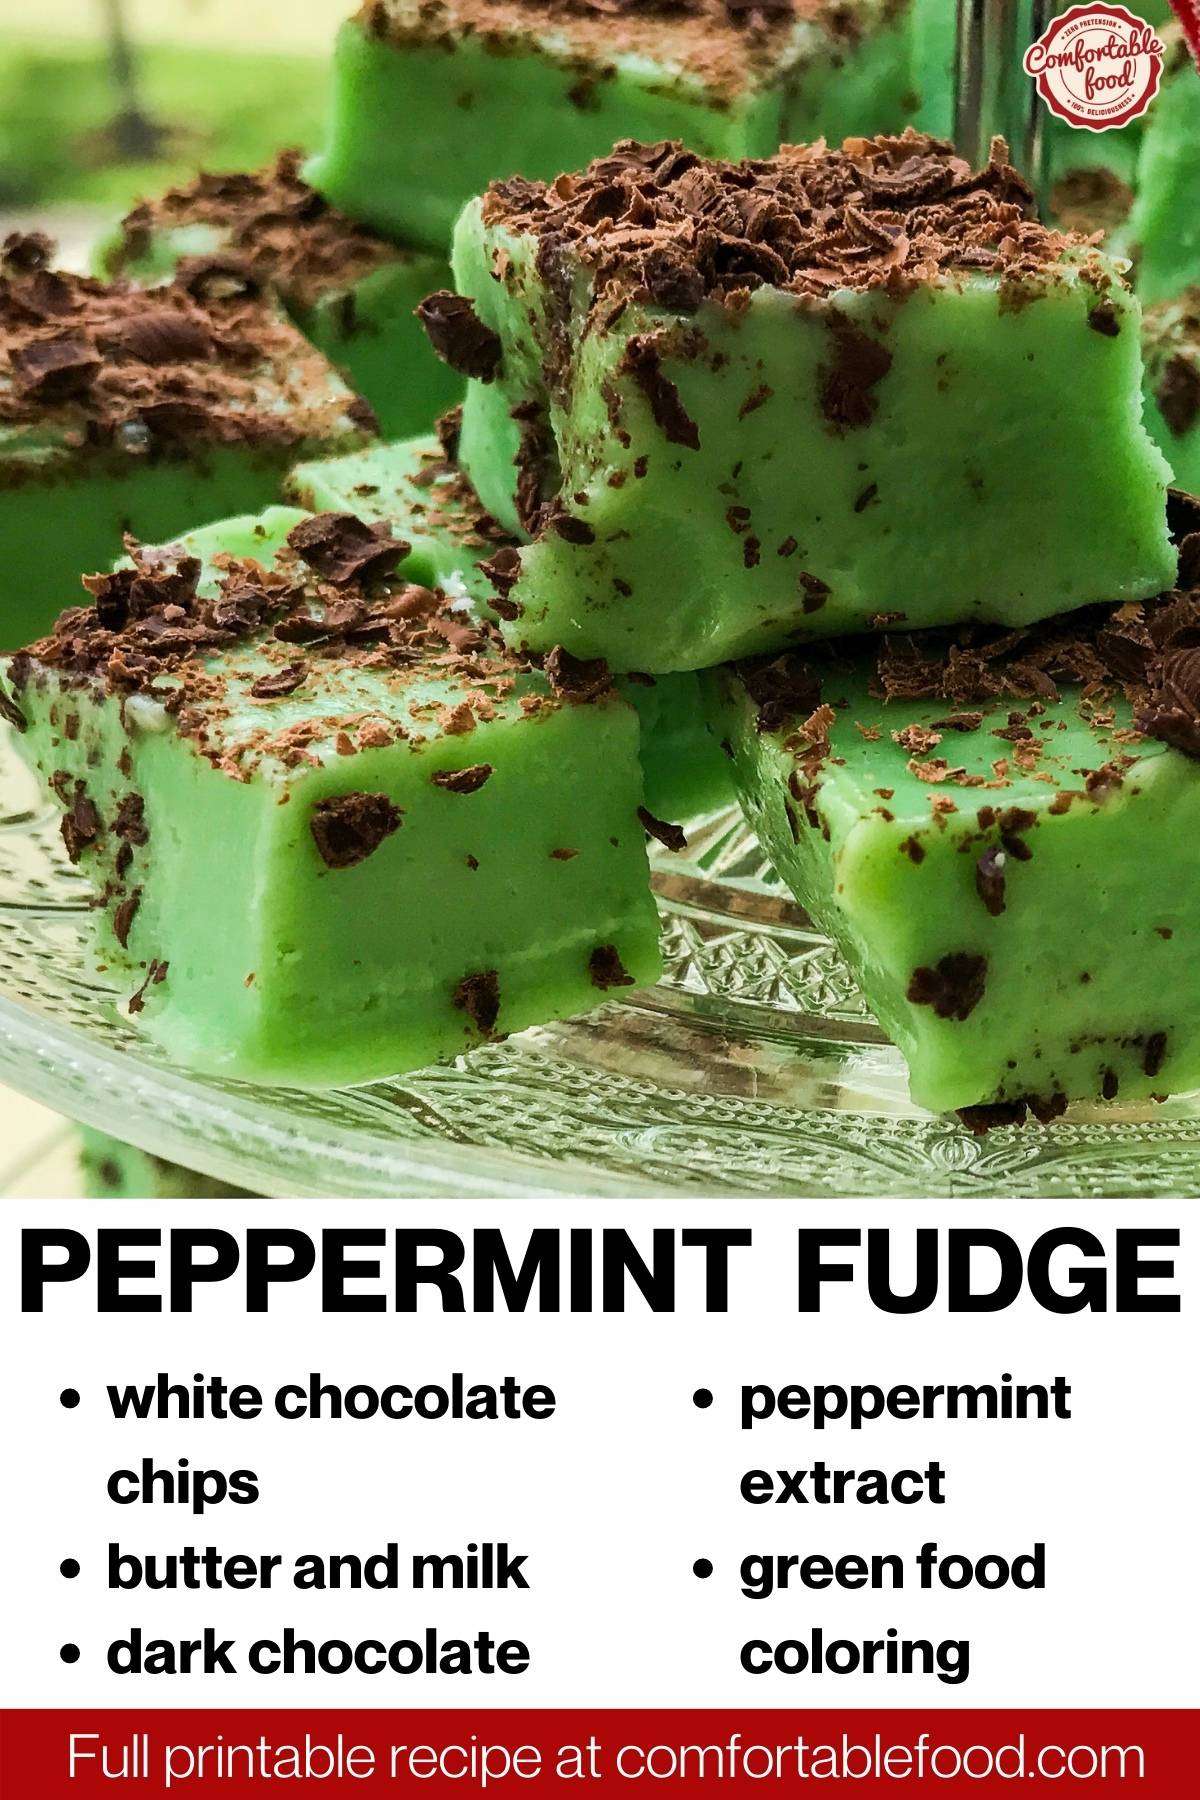 Peppermint fudge